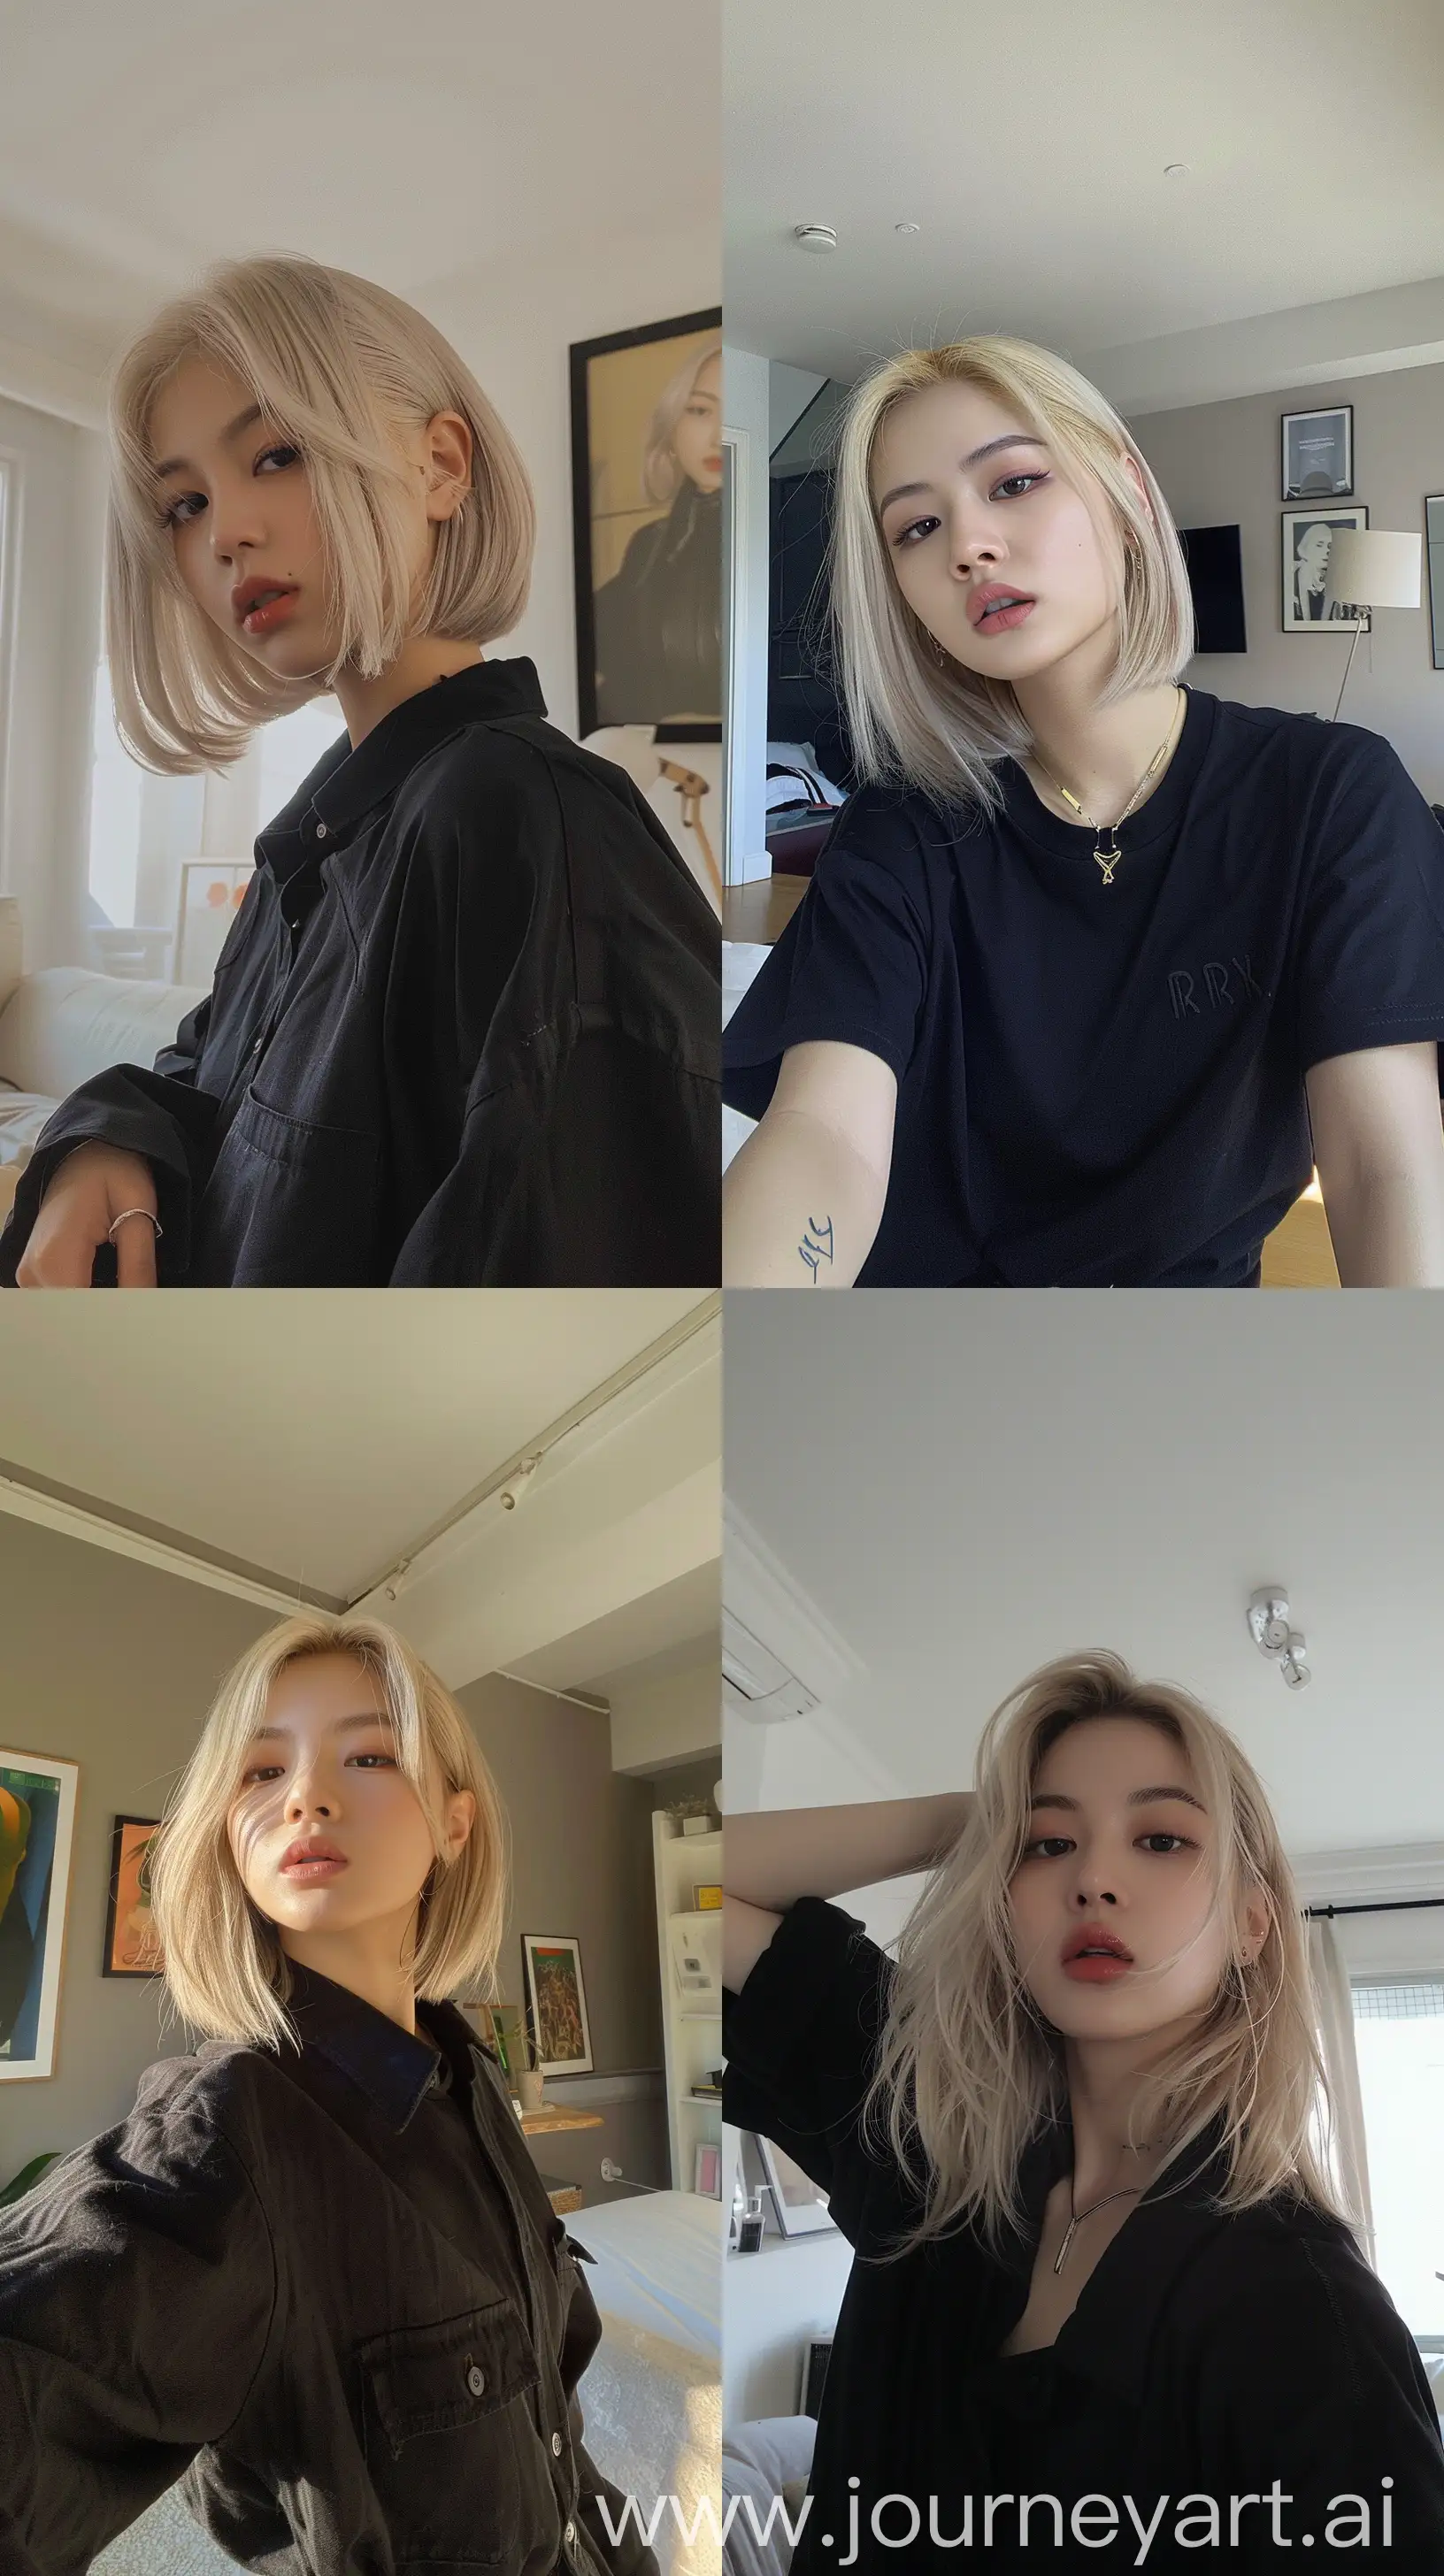 Blackpinks-Jennie-Blonde-Wolfcut-Selfie-in-Stylish-Room-Setting